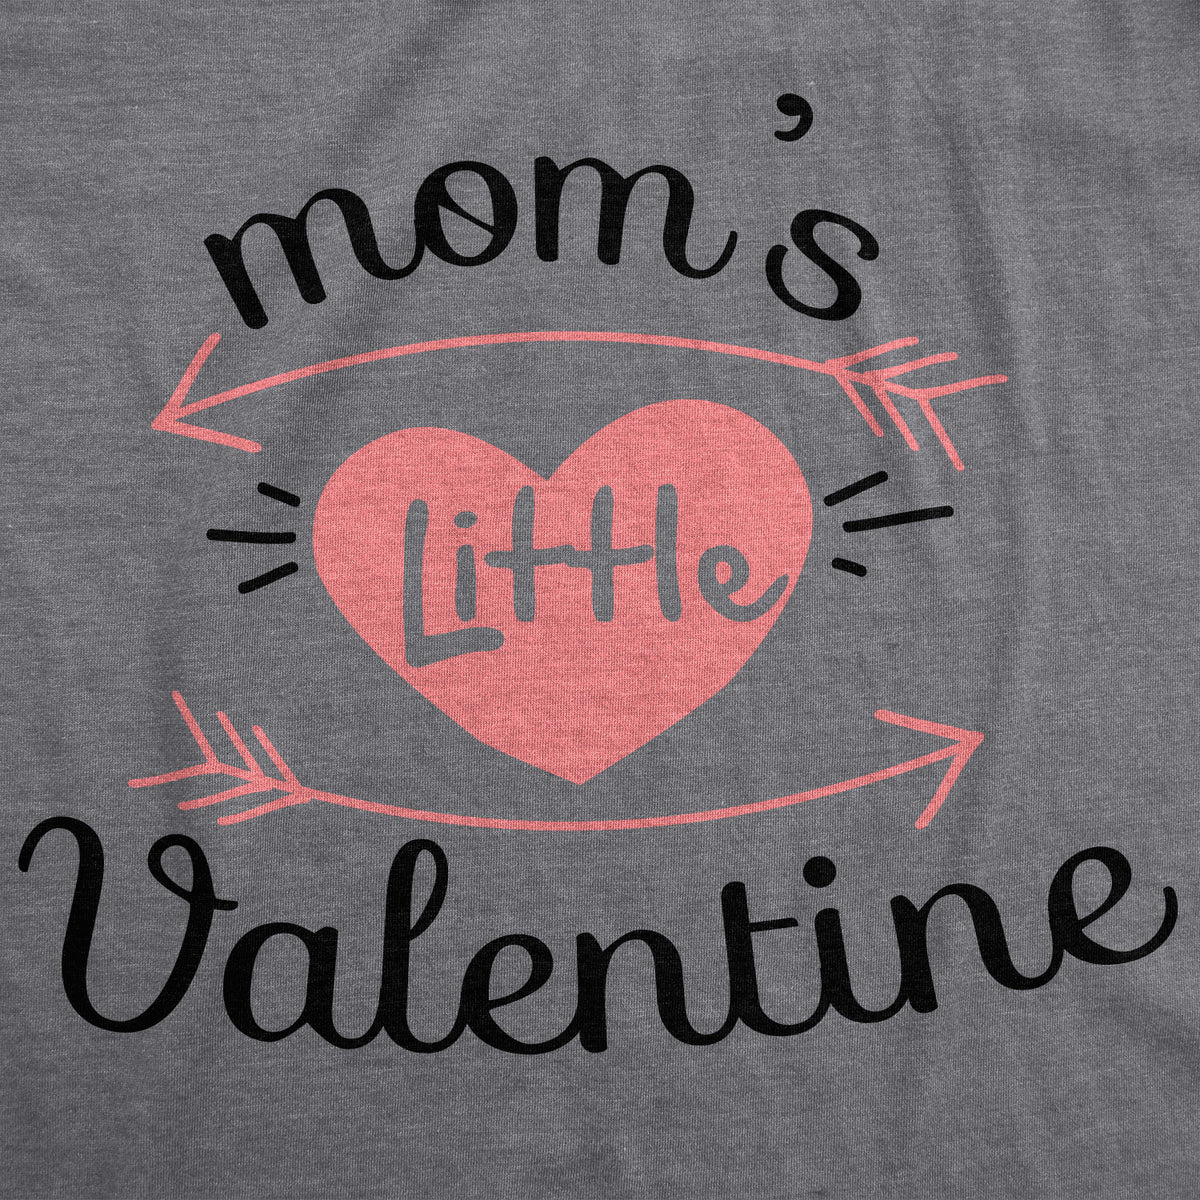 Mom&#39;s Little Valentine Maternity T Shirt